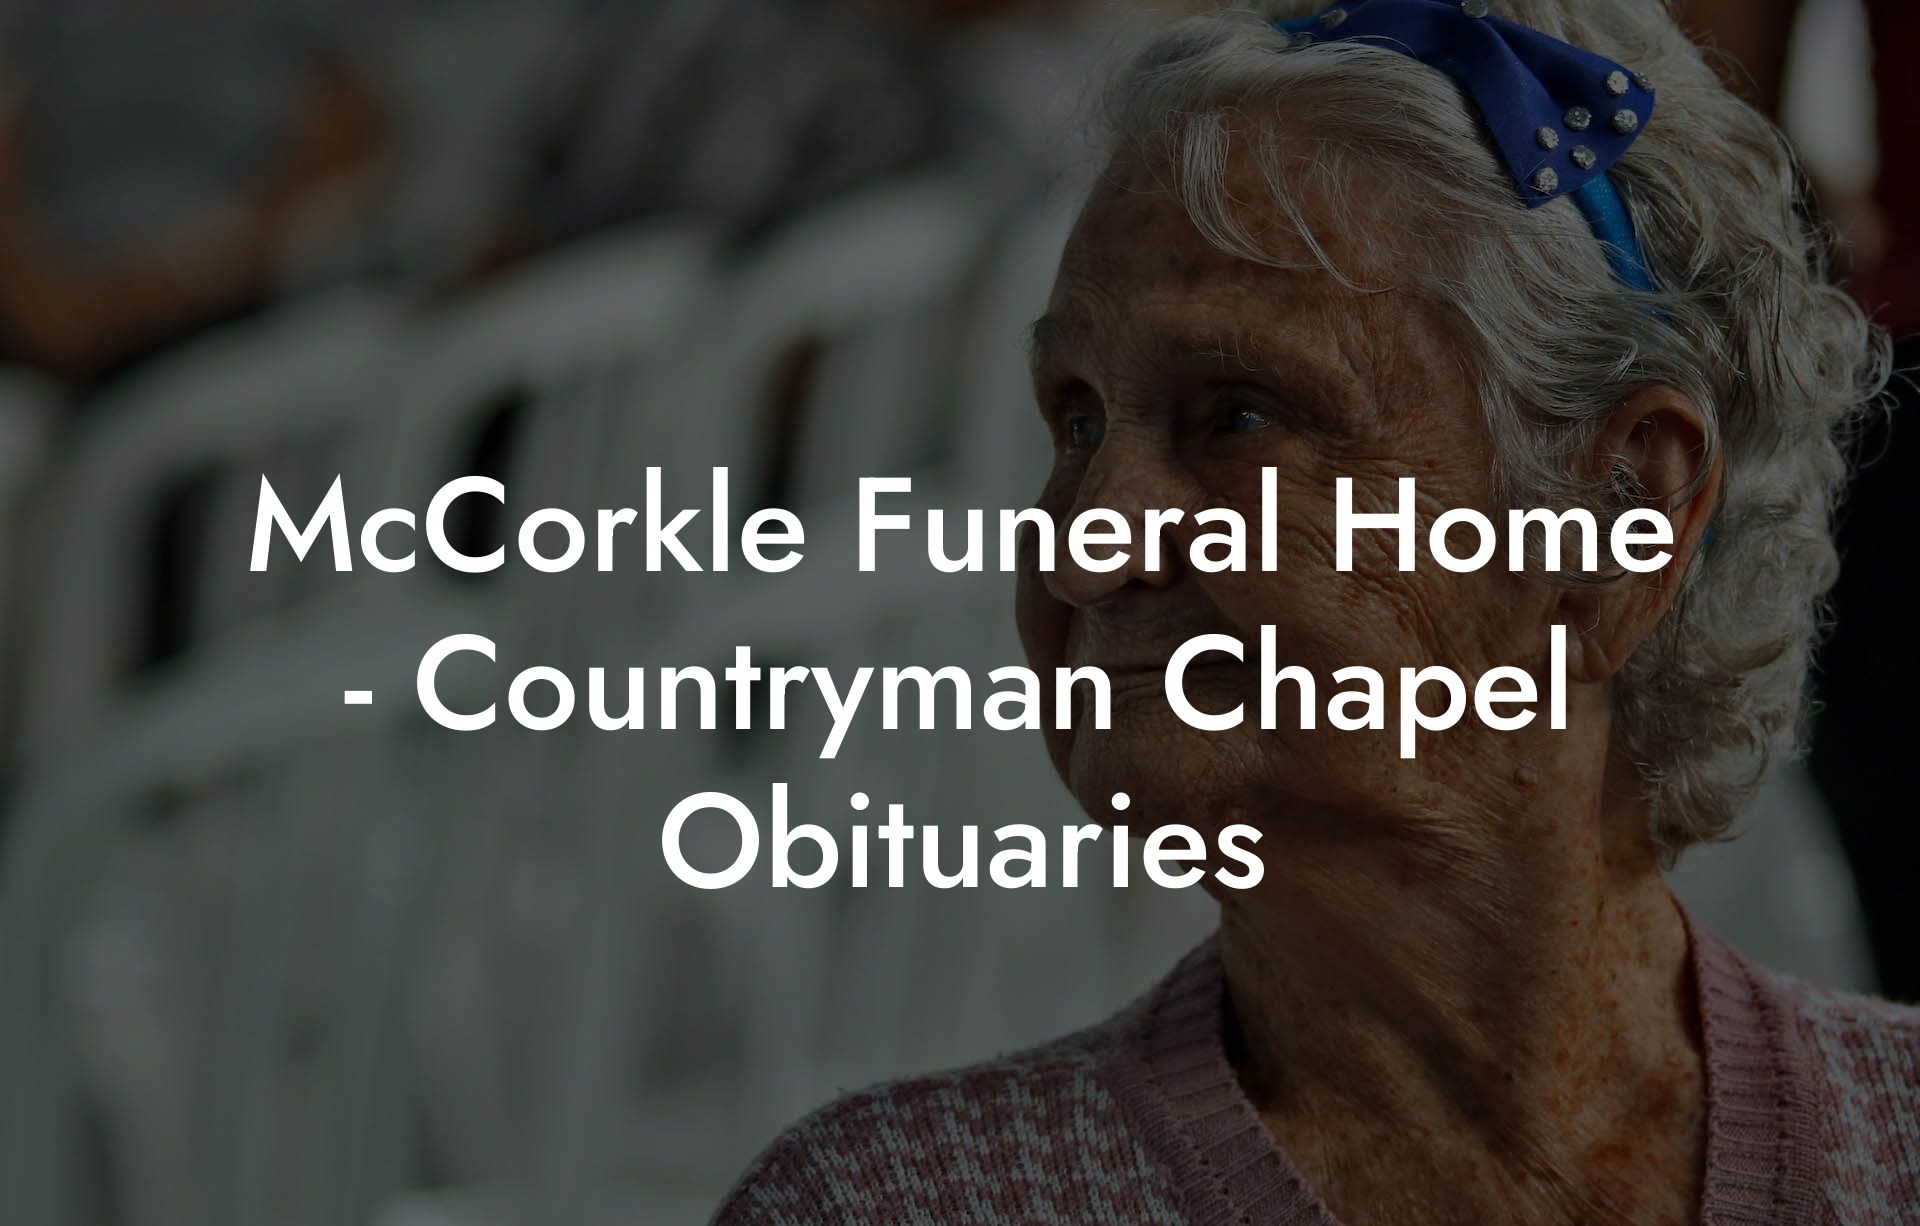 McCorkle Funeral Home - Countryman Chapel Obituaries